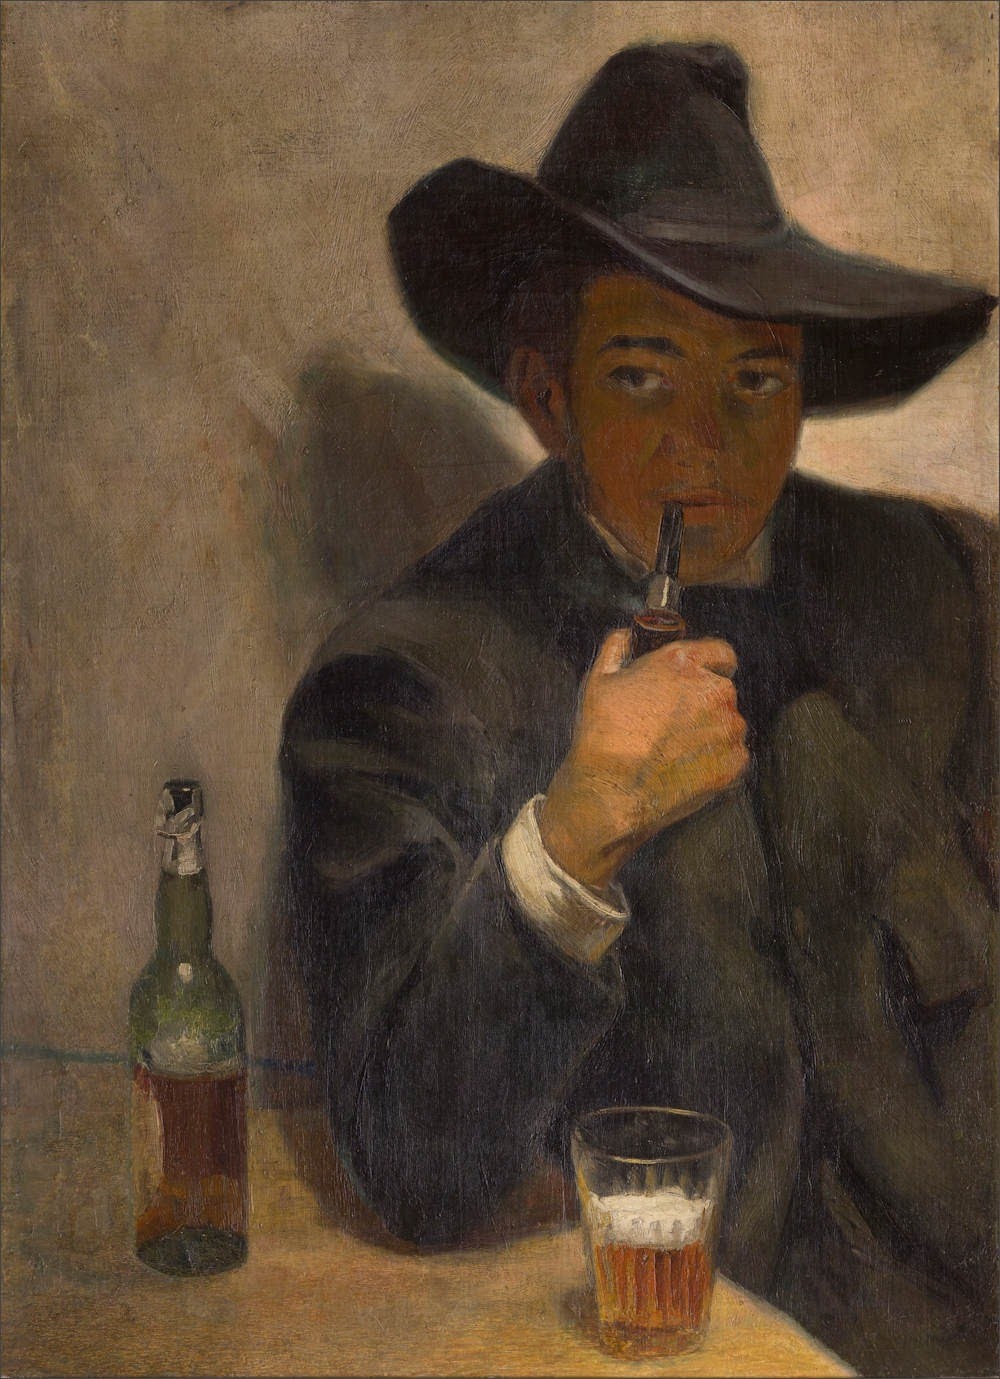 Diego+Rivera-1886-1957 (26).jpg